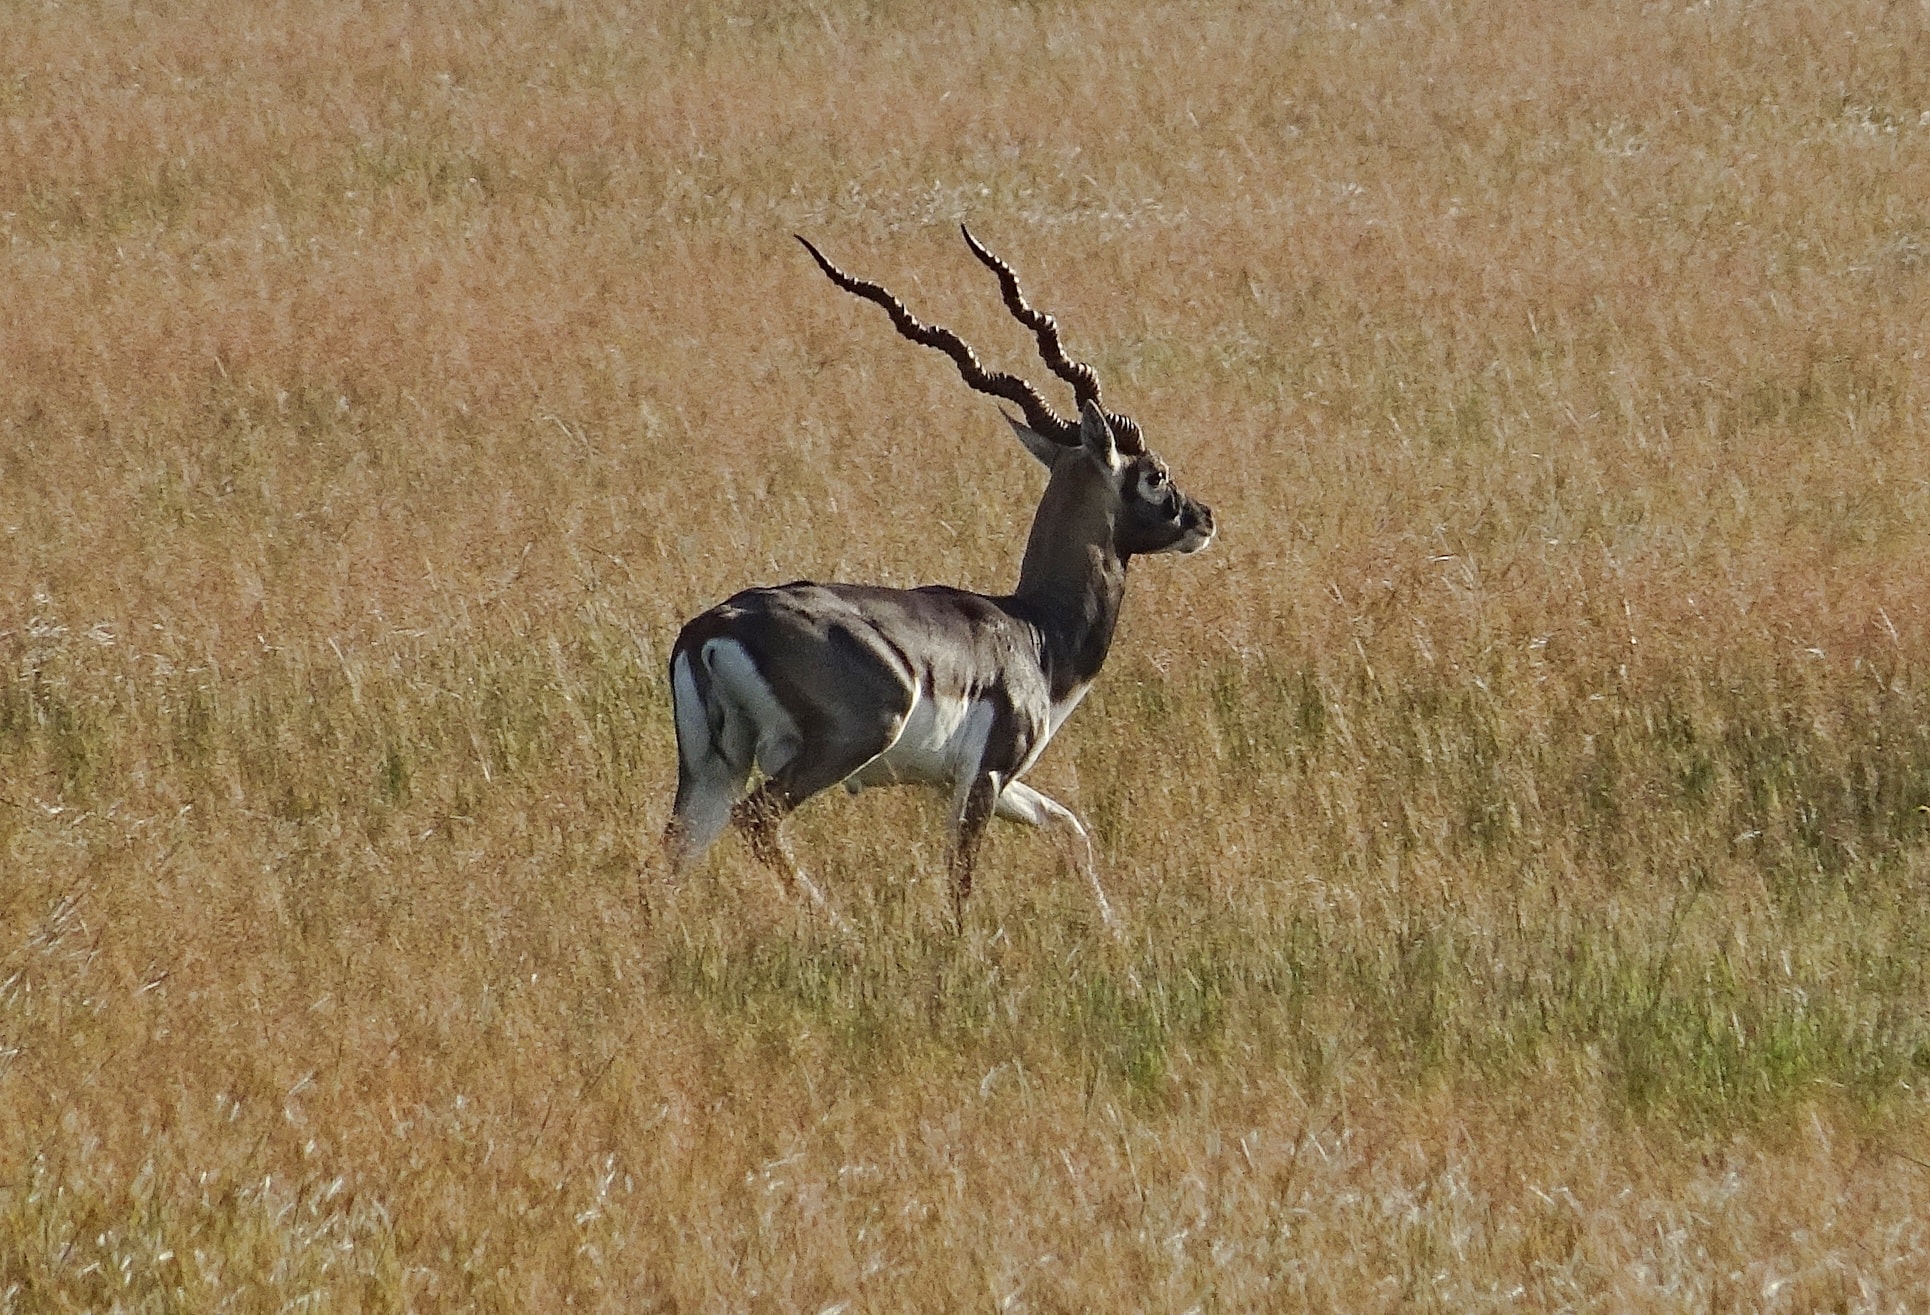 The Blackbuck: The Indian Antelope